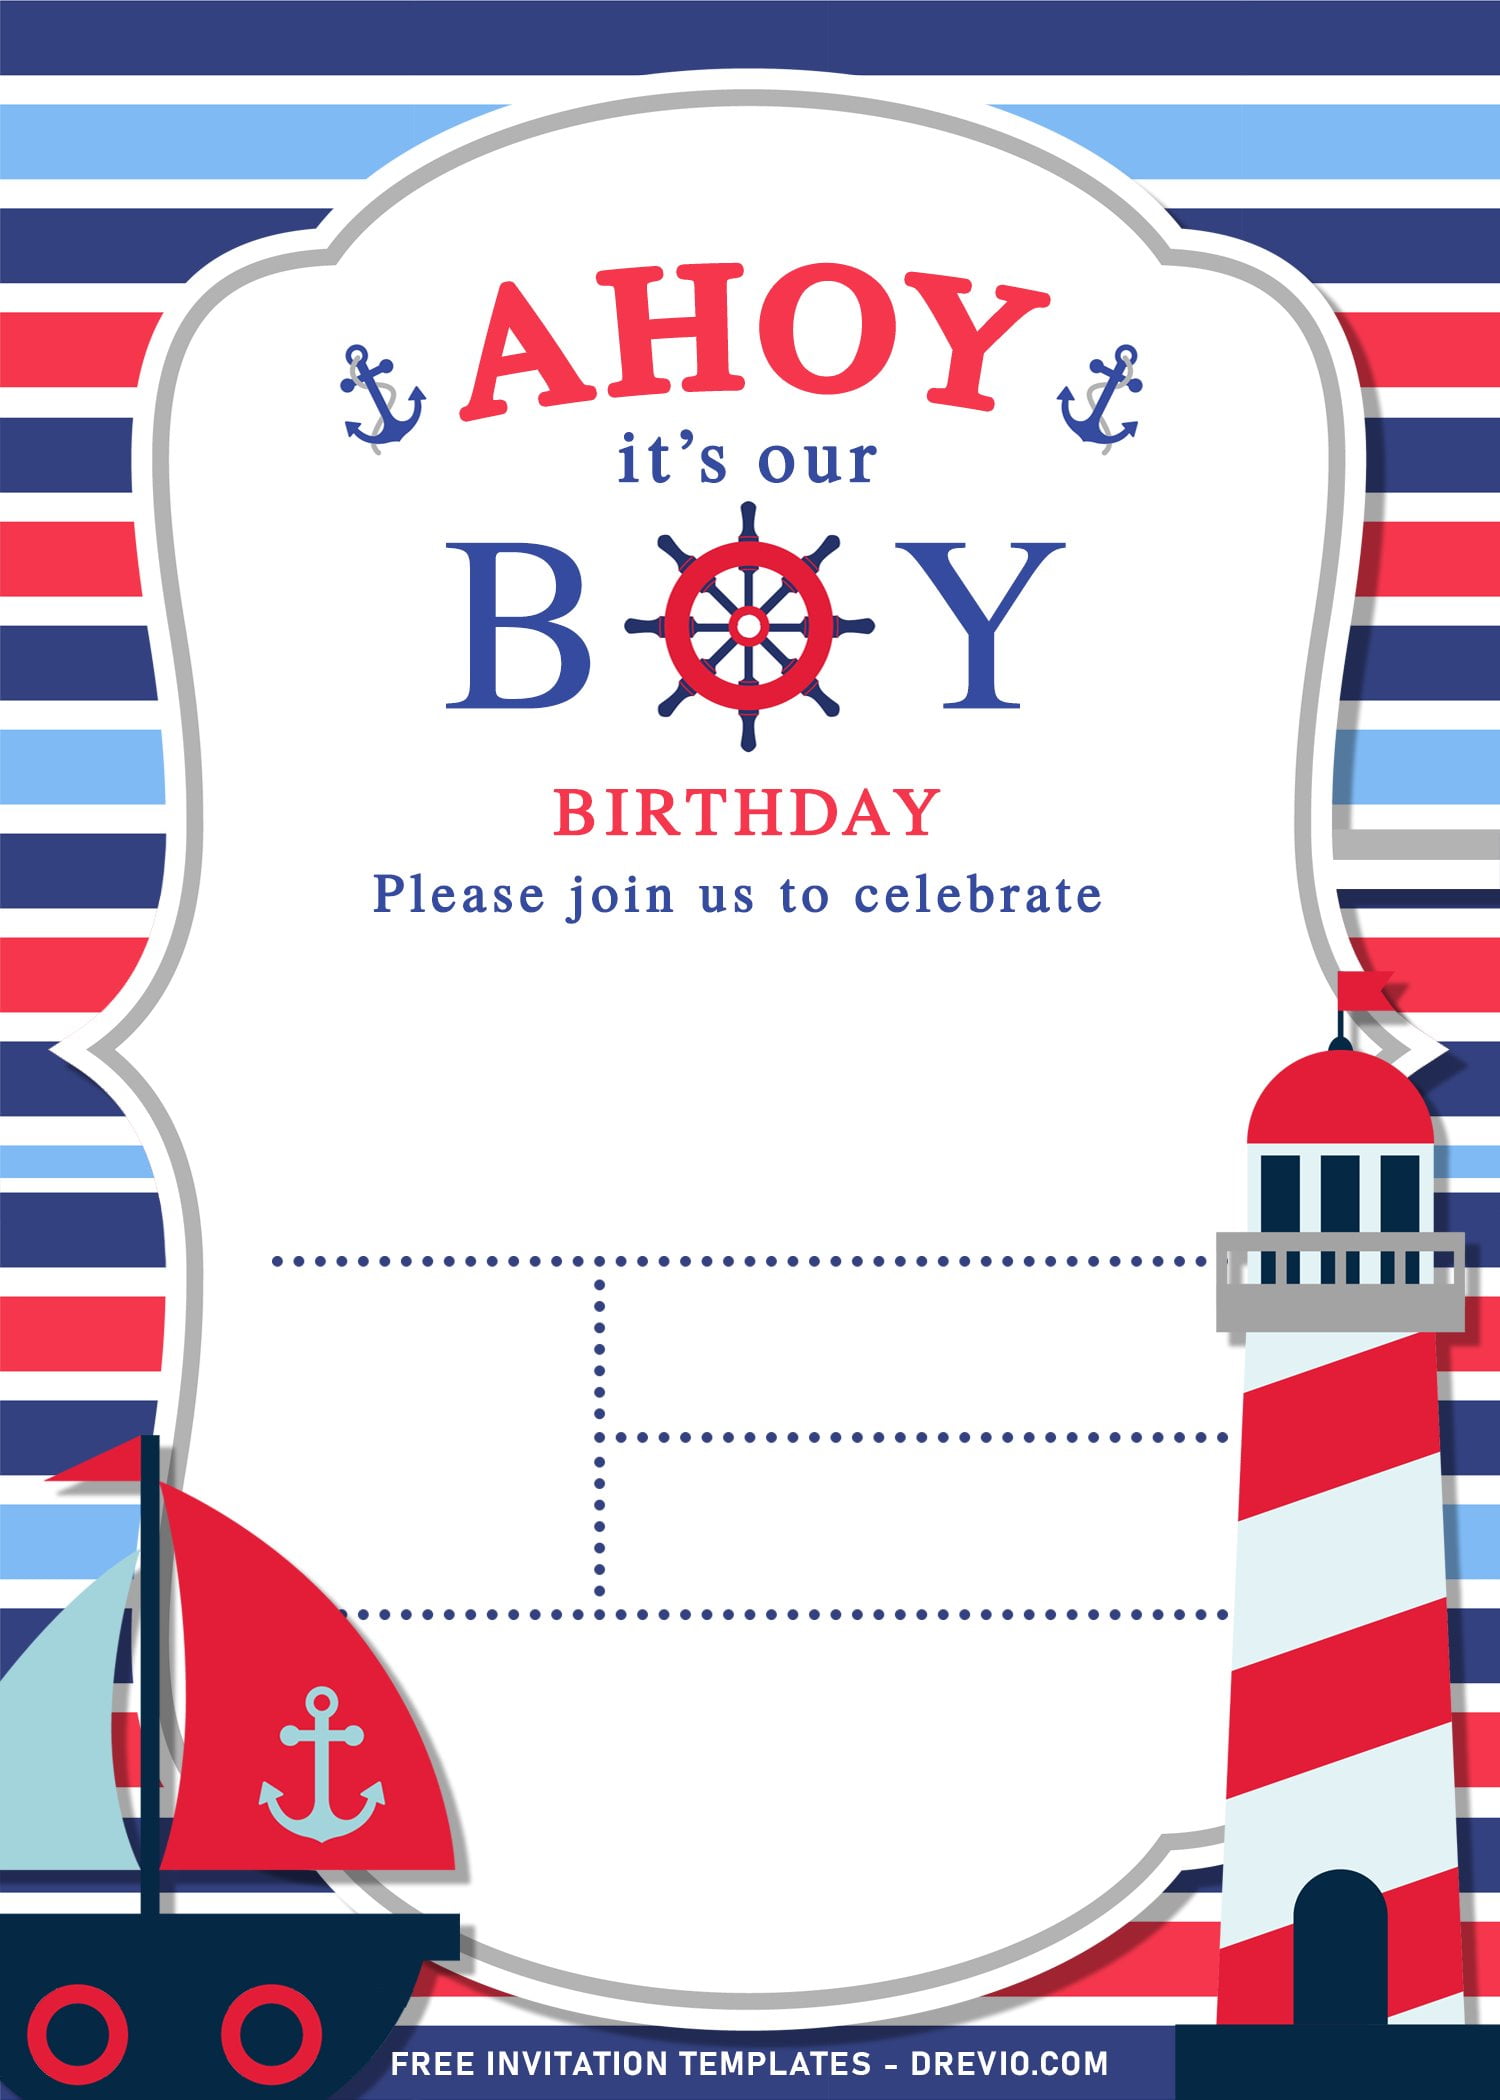 paper-invitations-nautical-birthday-invitation-with-photo-editable